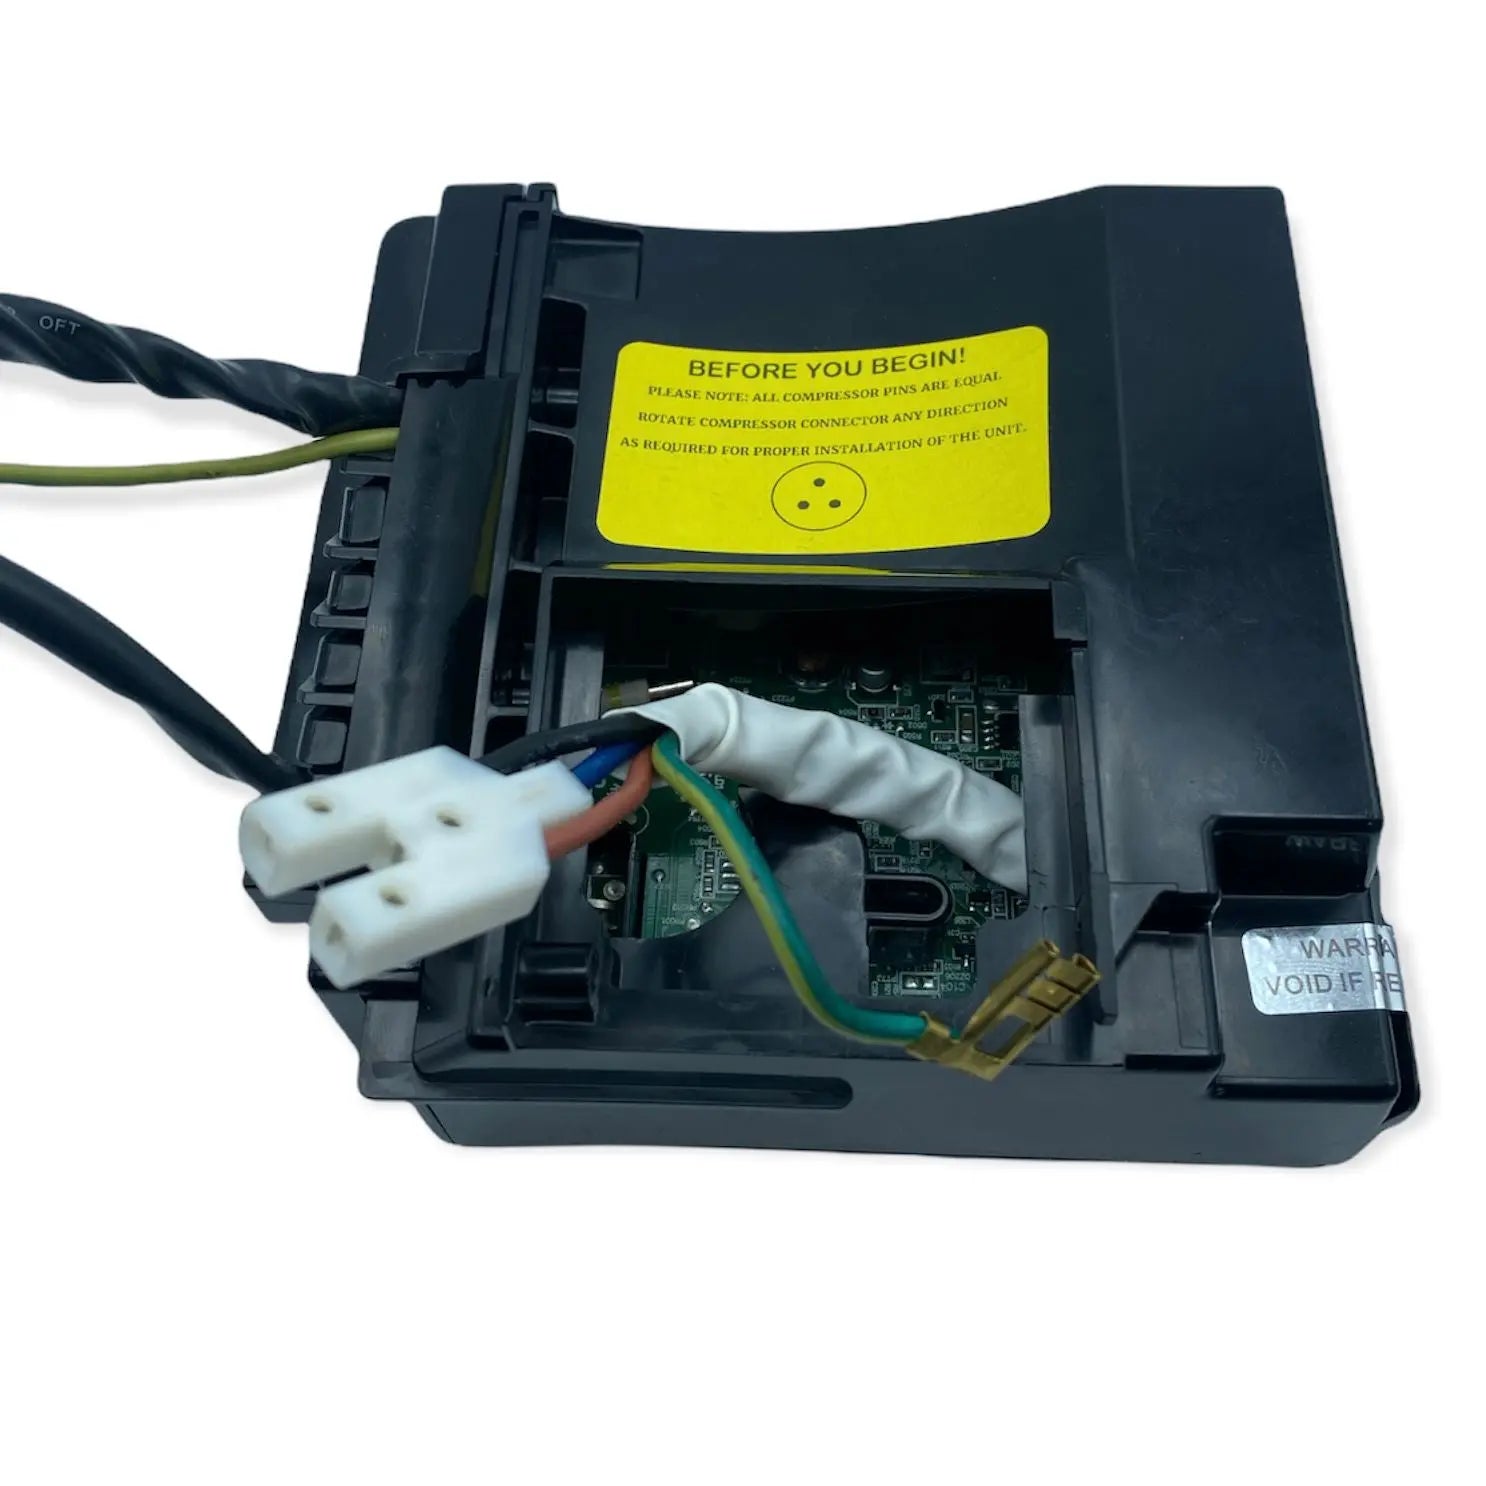 G.E /Haier Refrigerator Inverter Board Kit - 200D5948P039-220V,  REPLACES: 200D5948P040  519306294 INVERTEC